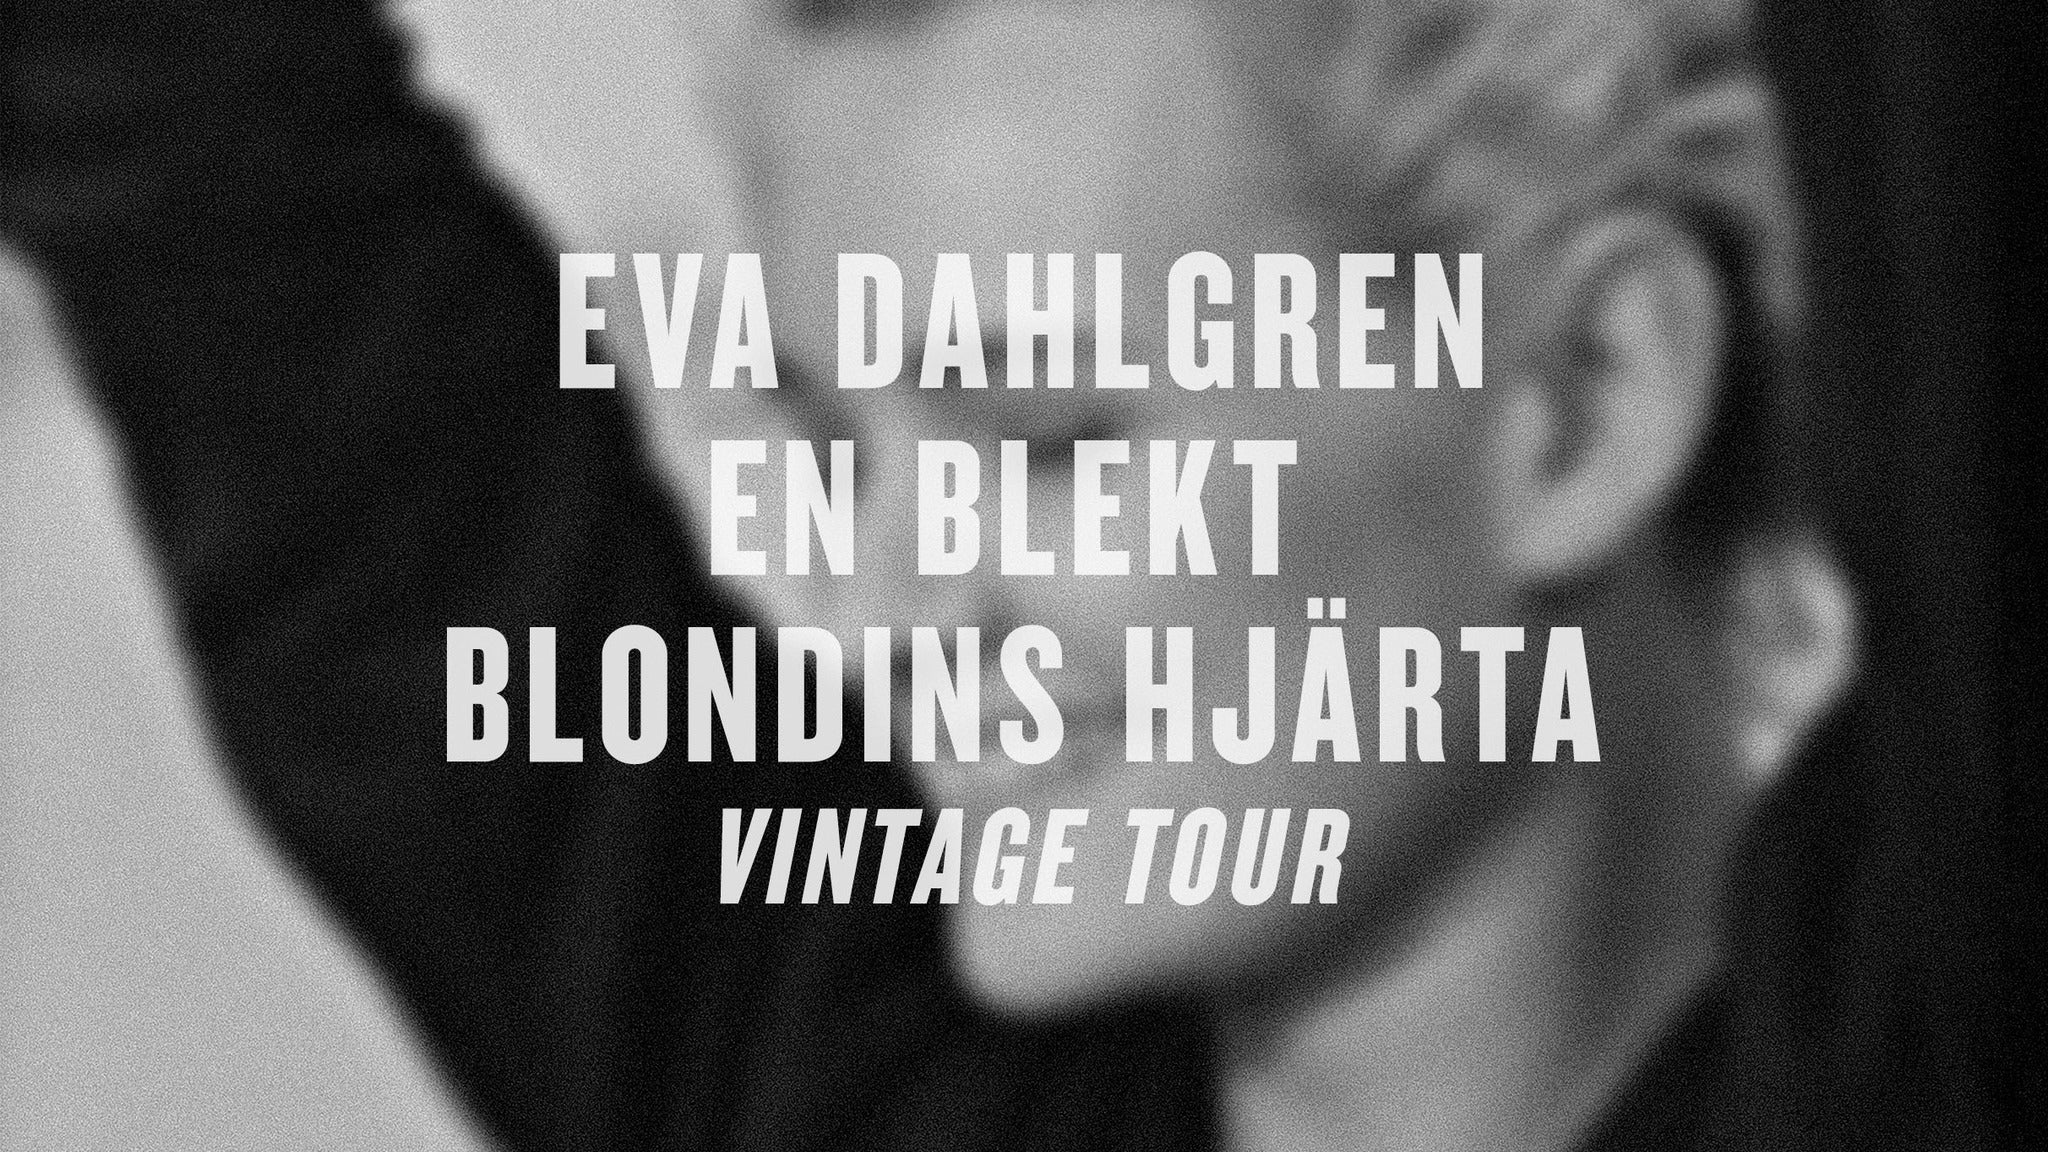 Eva Dahlgren En blekt blondins hjärta - Vintage tour